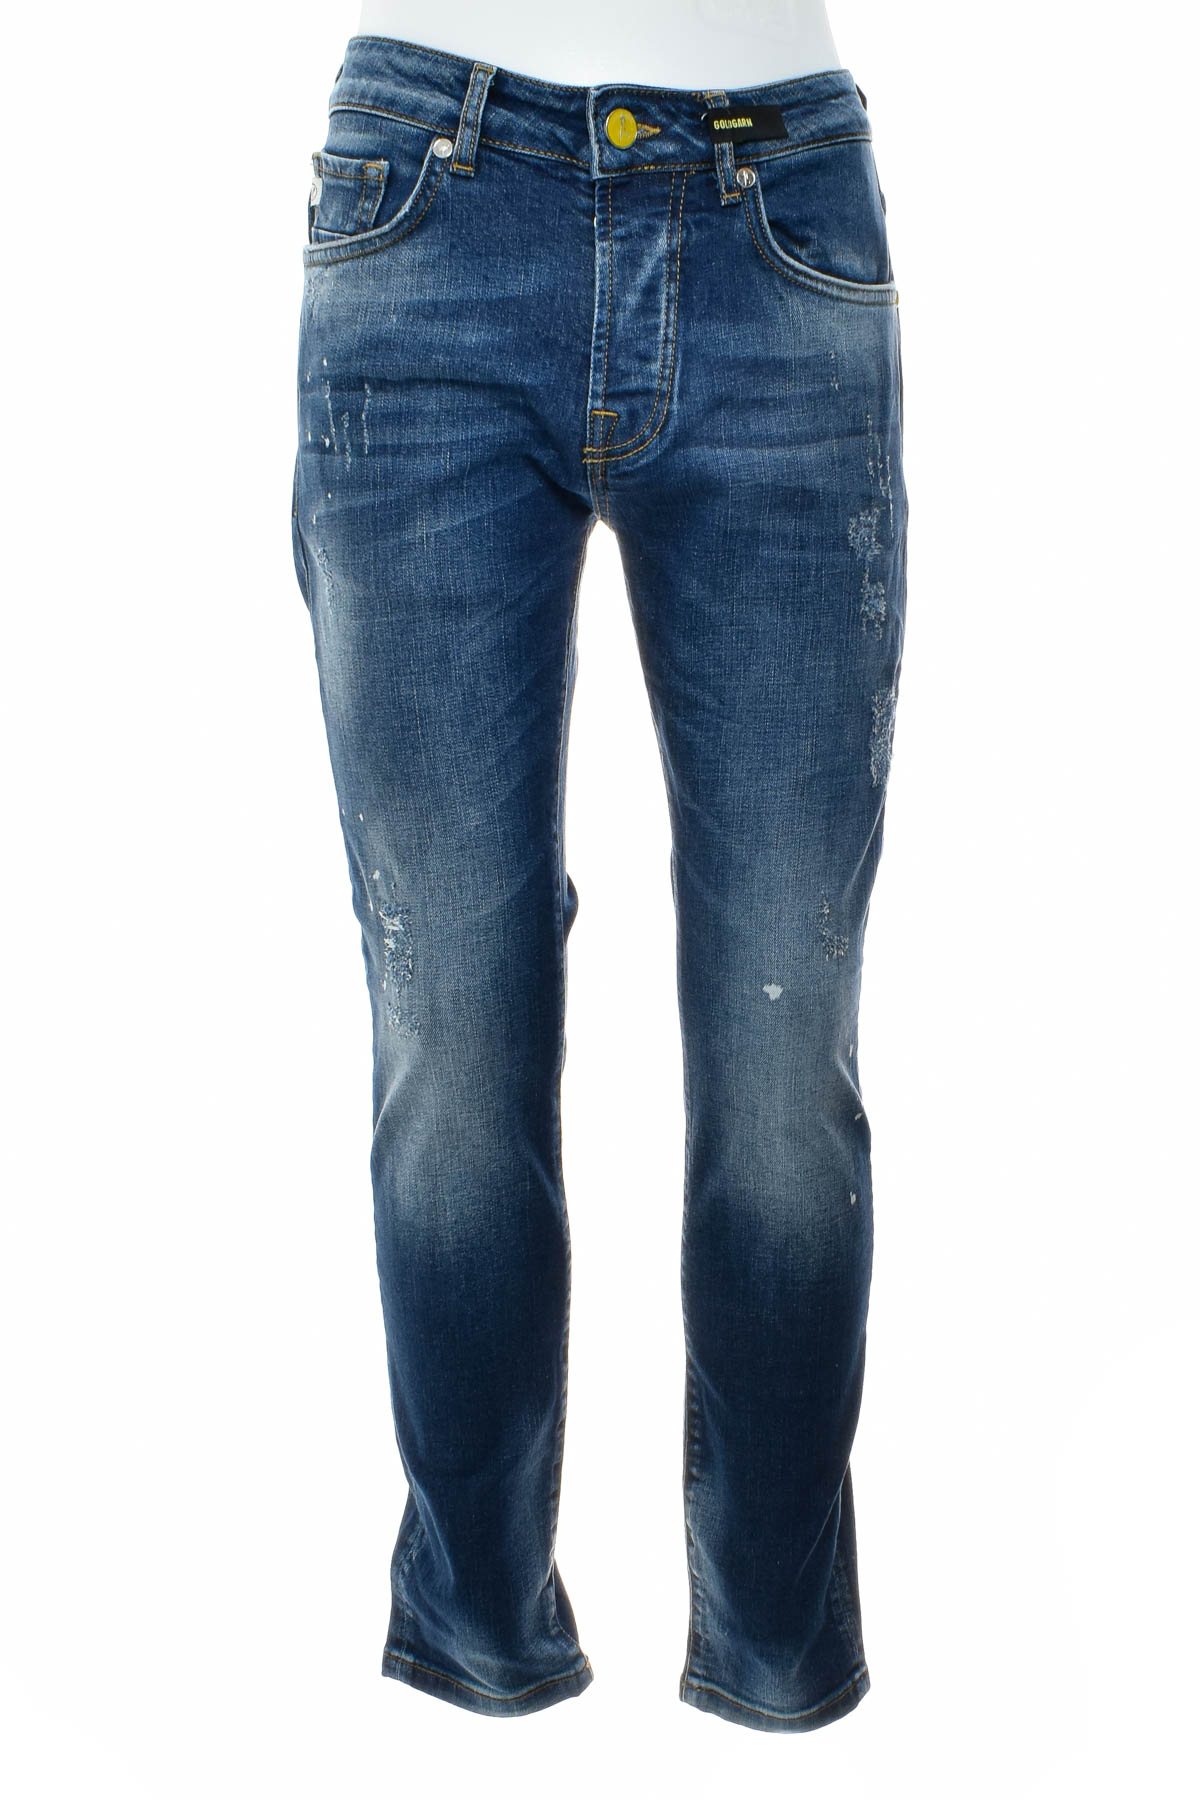 Men's jeans - GOLDGARN - 0